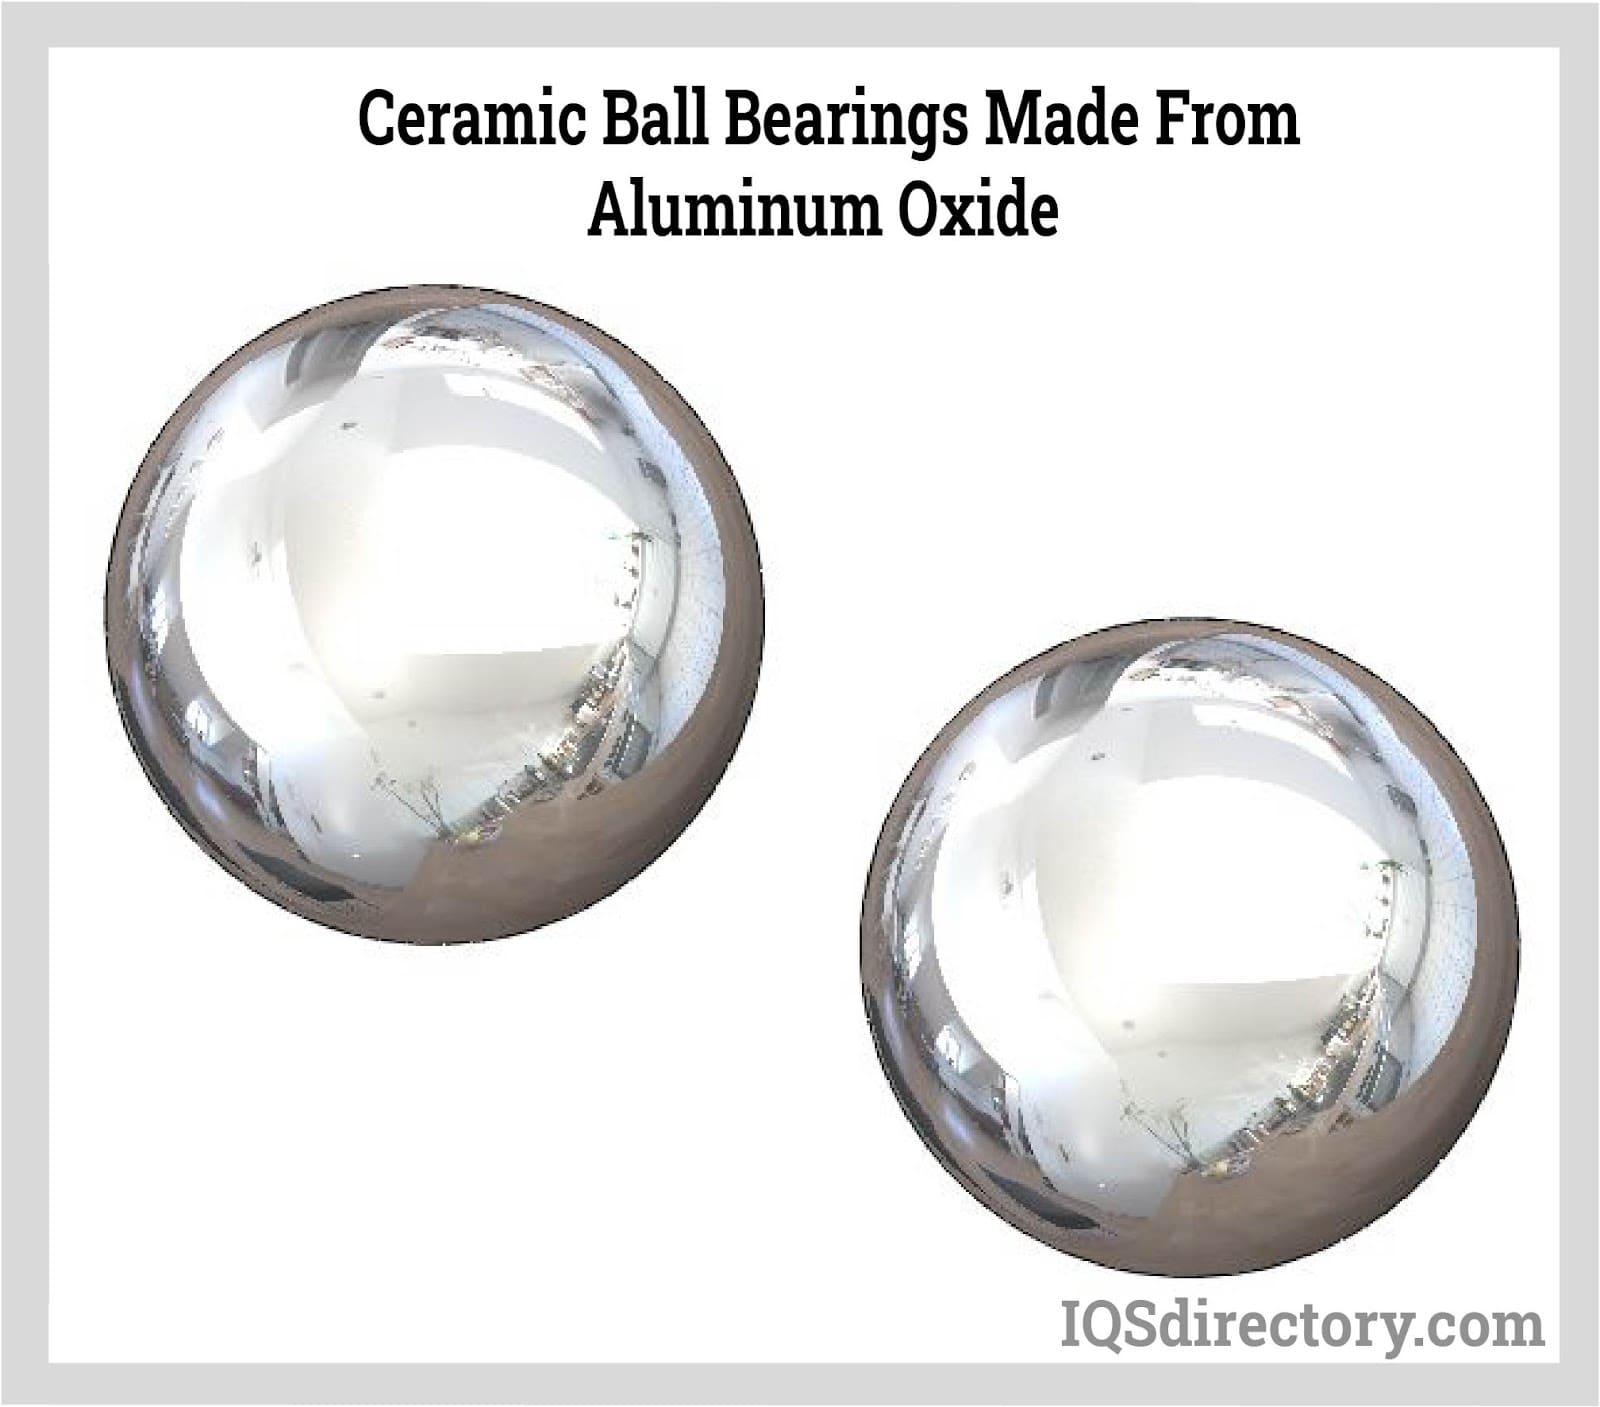 Ceramic Ball Bearings Made From Aluminum Oxide